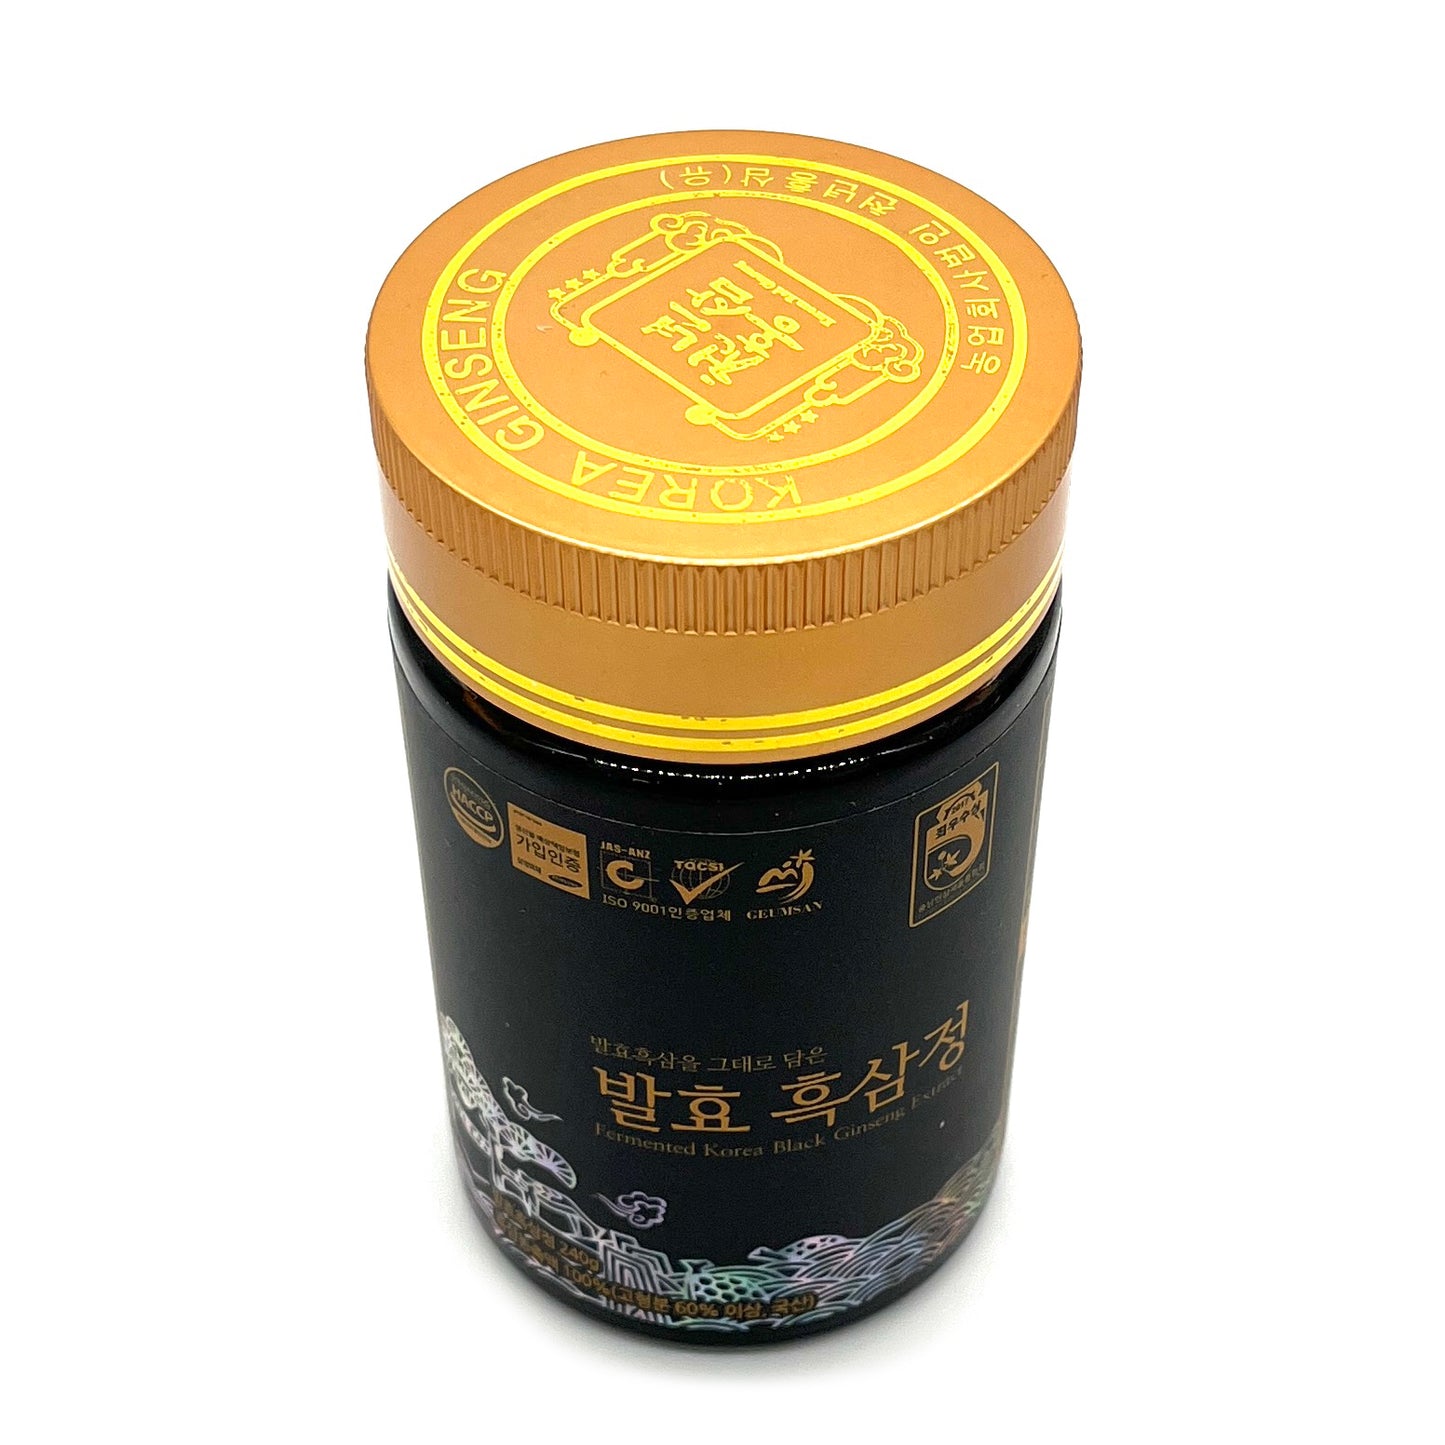 [Chunyun Hongsam] Fermentation Black Ginseng Jung Extract (240g)